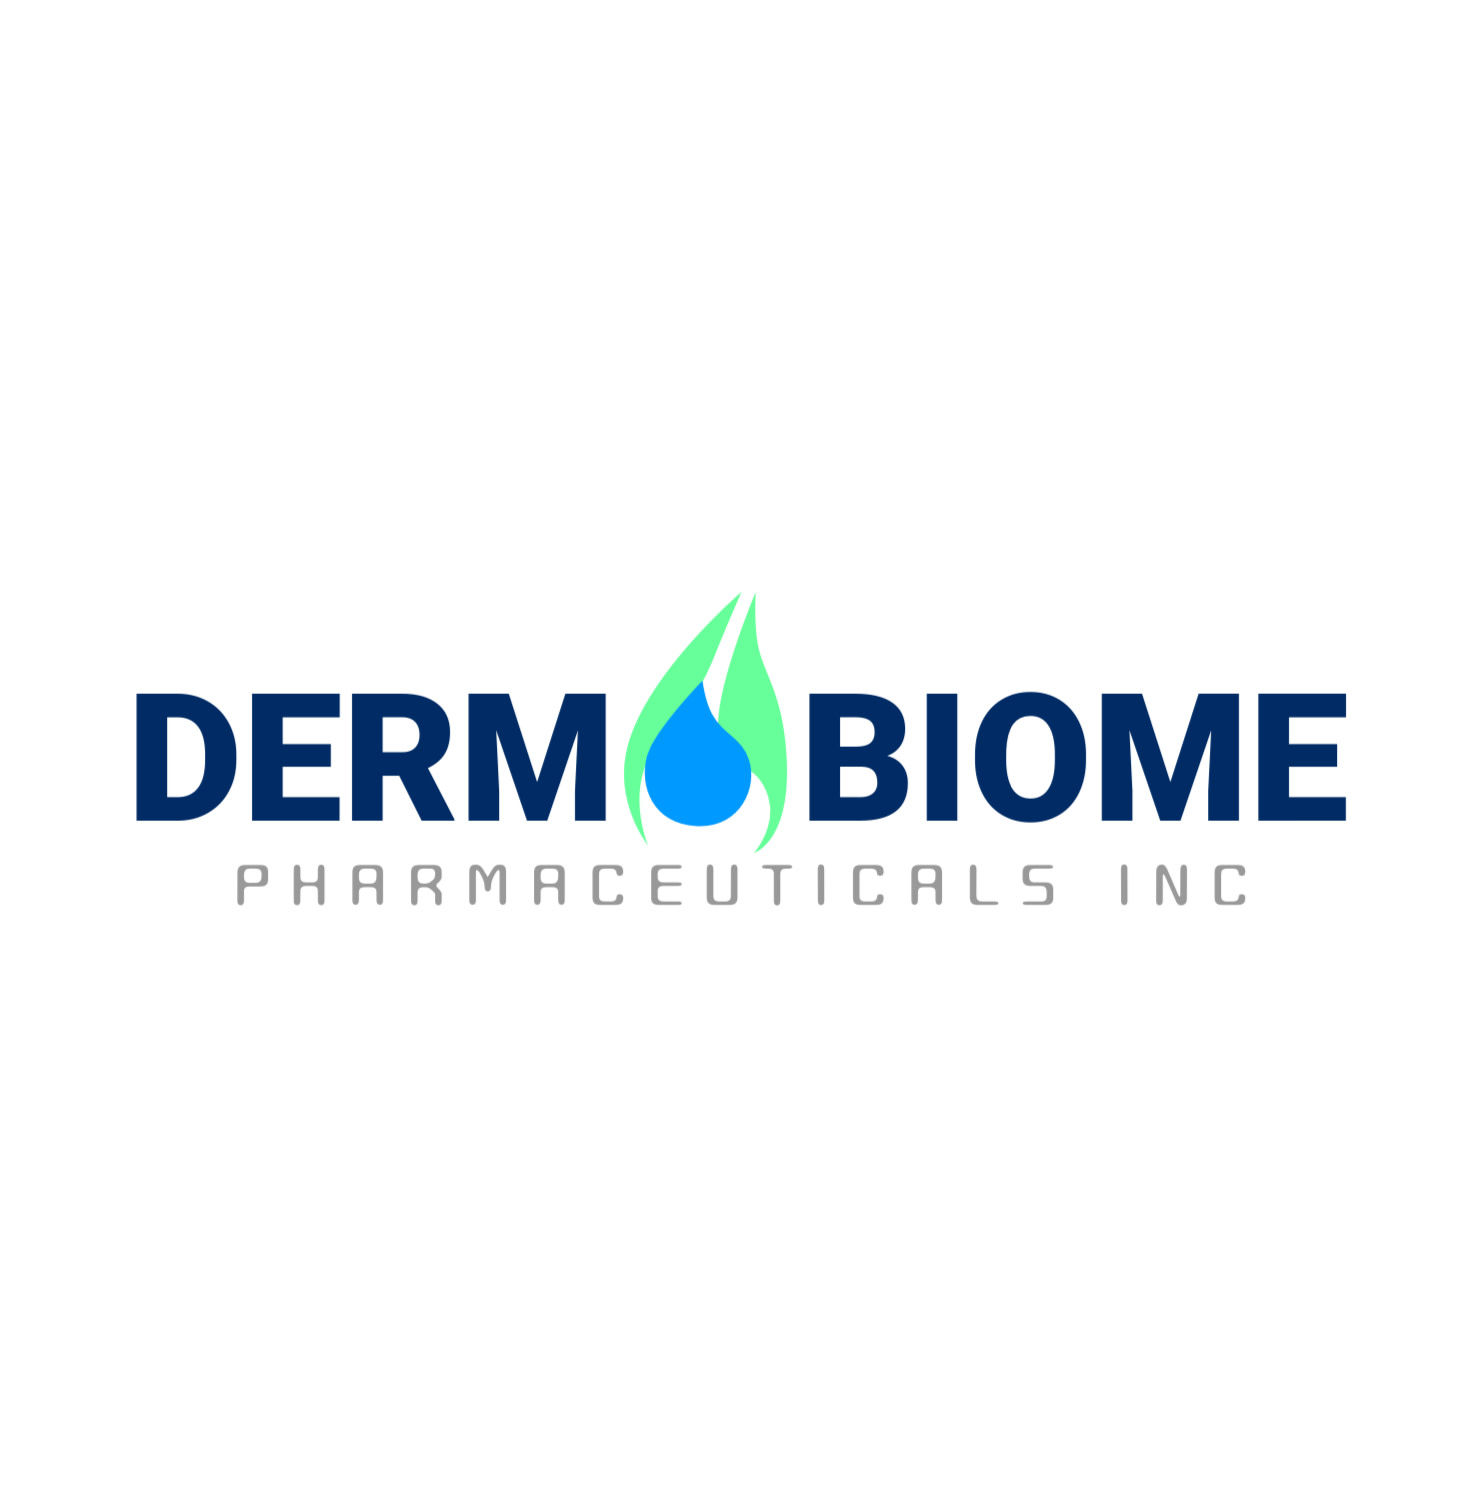 Derm-Biome Pharmaceuticals, Inc.